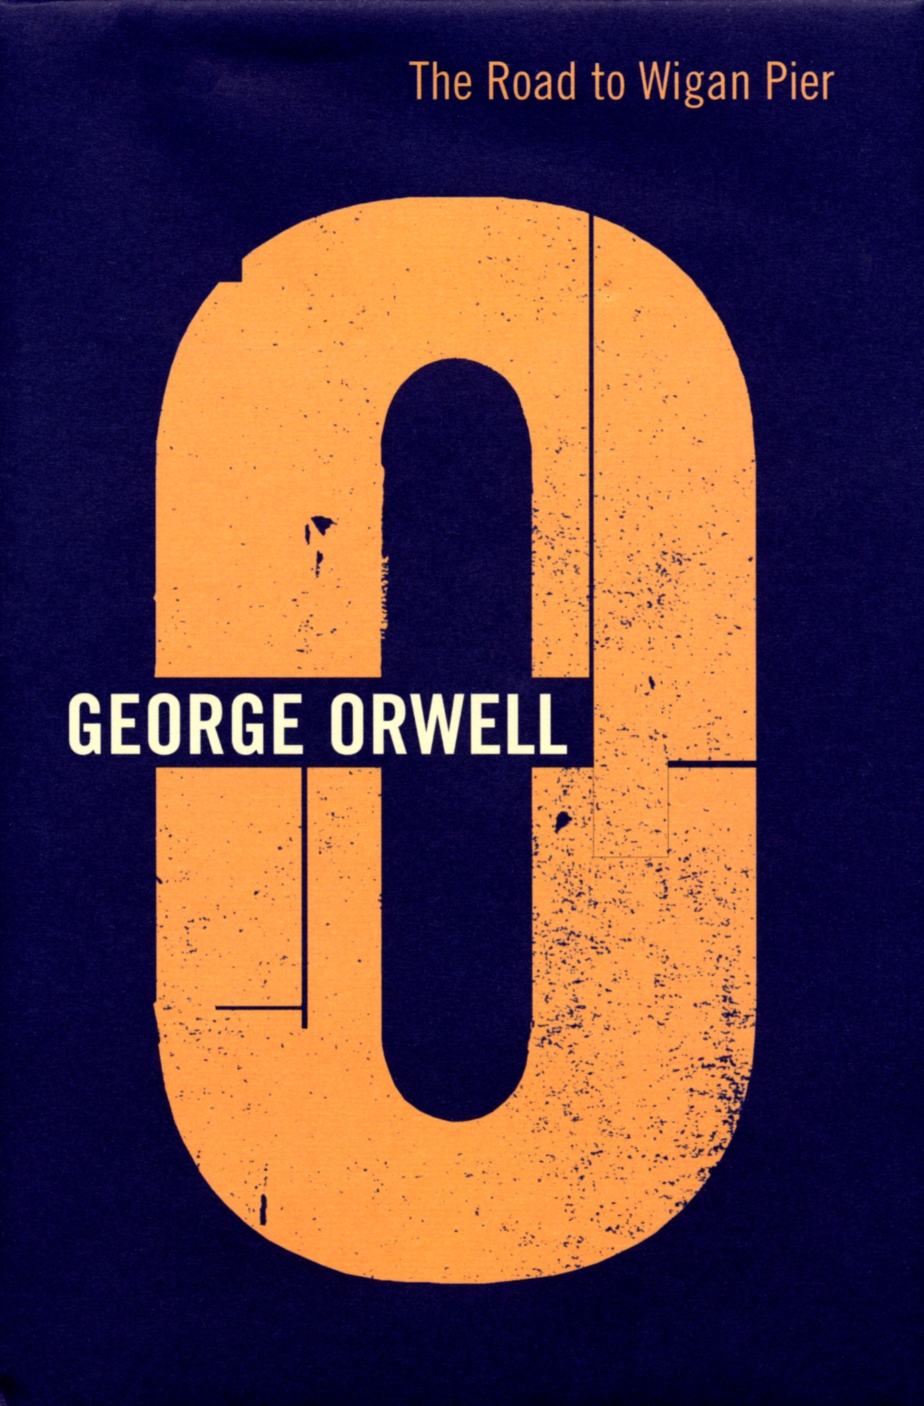 1984 by George Orwell - Penguin Books Australia